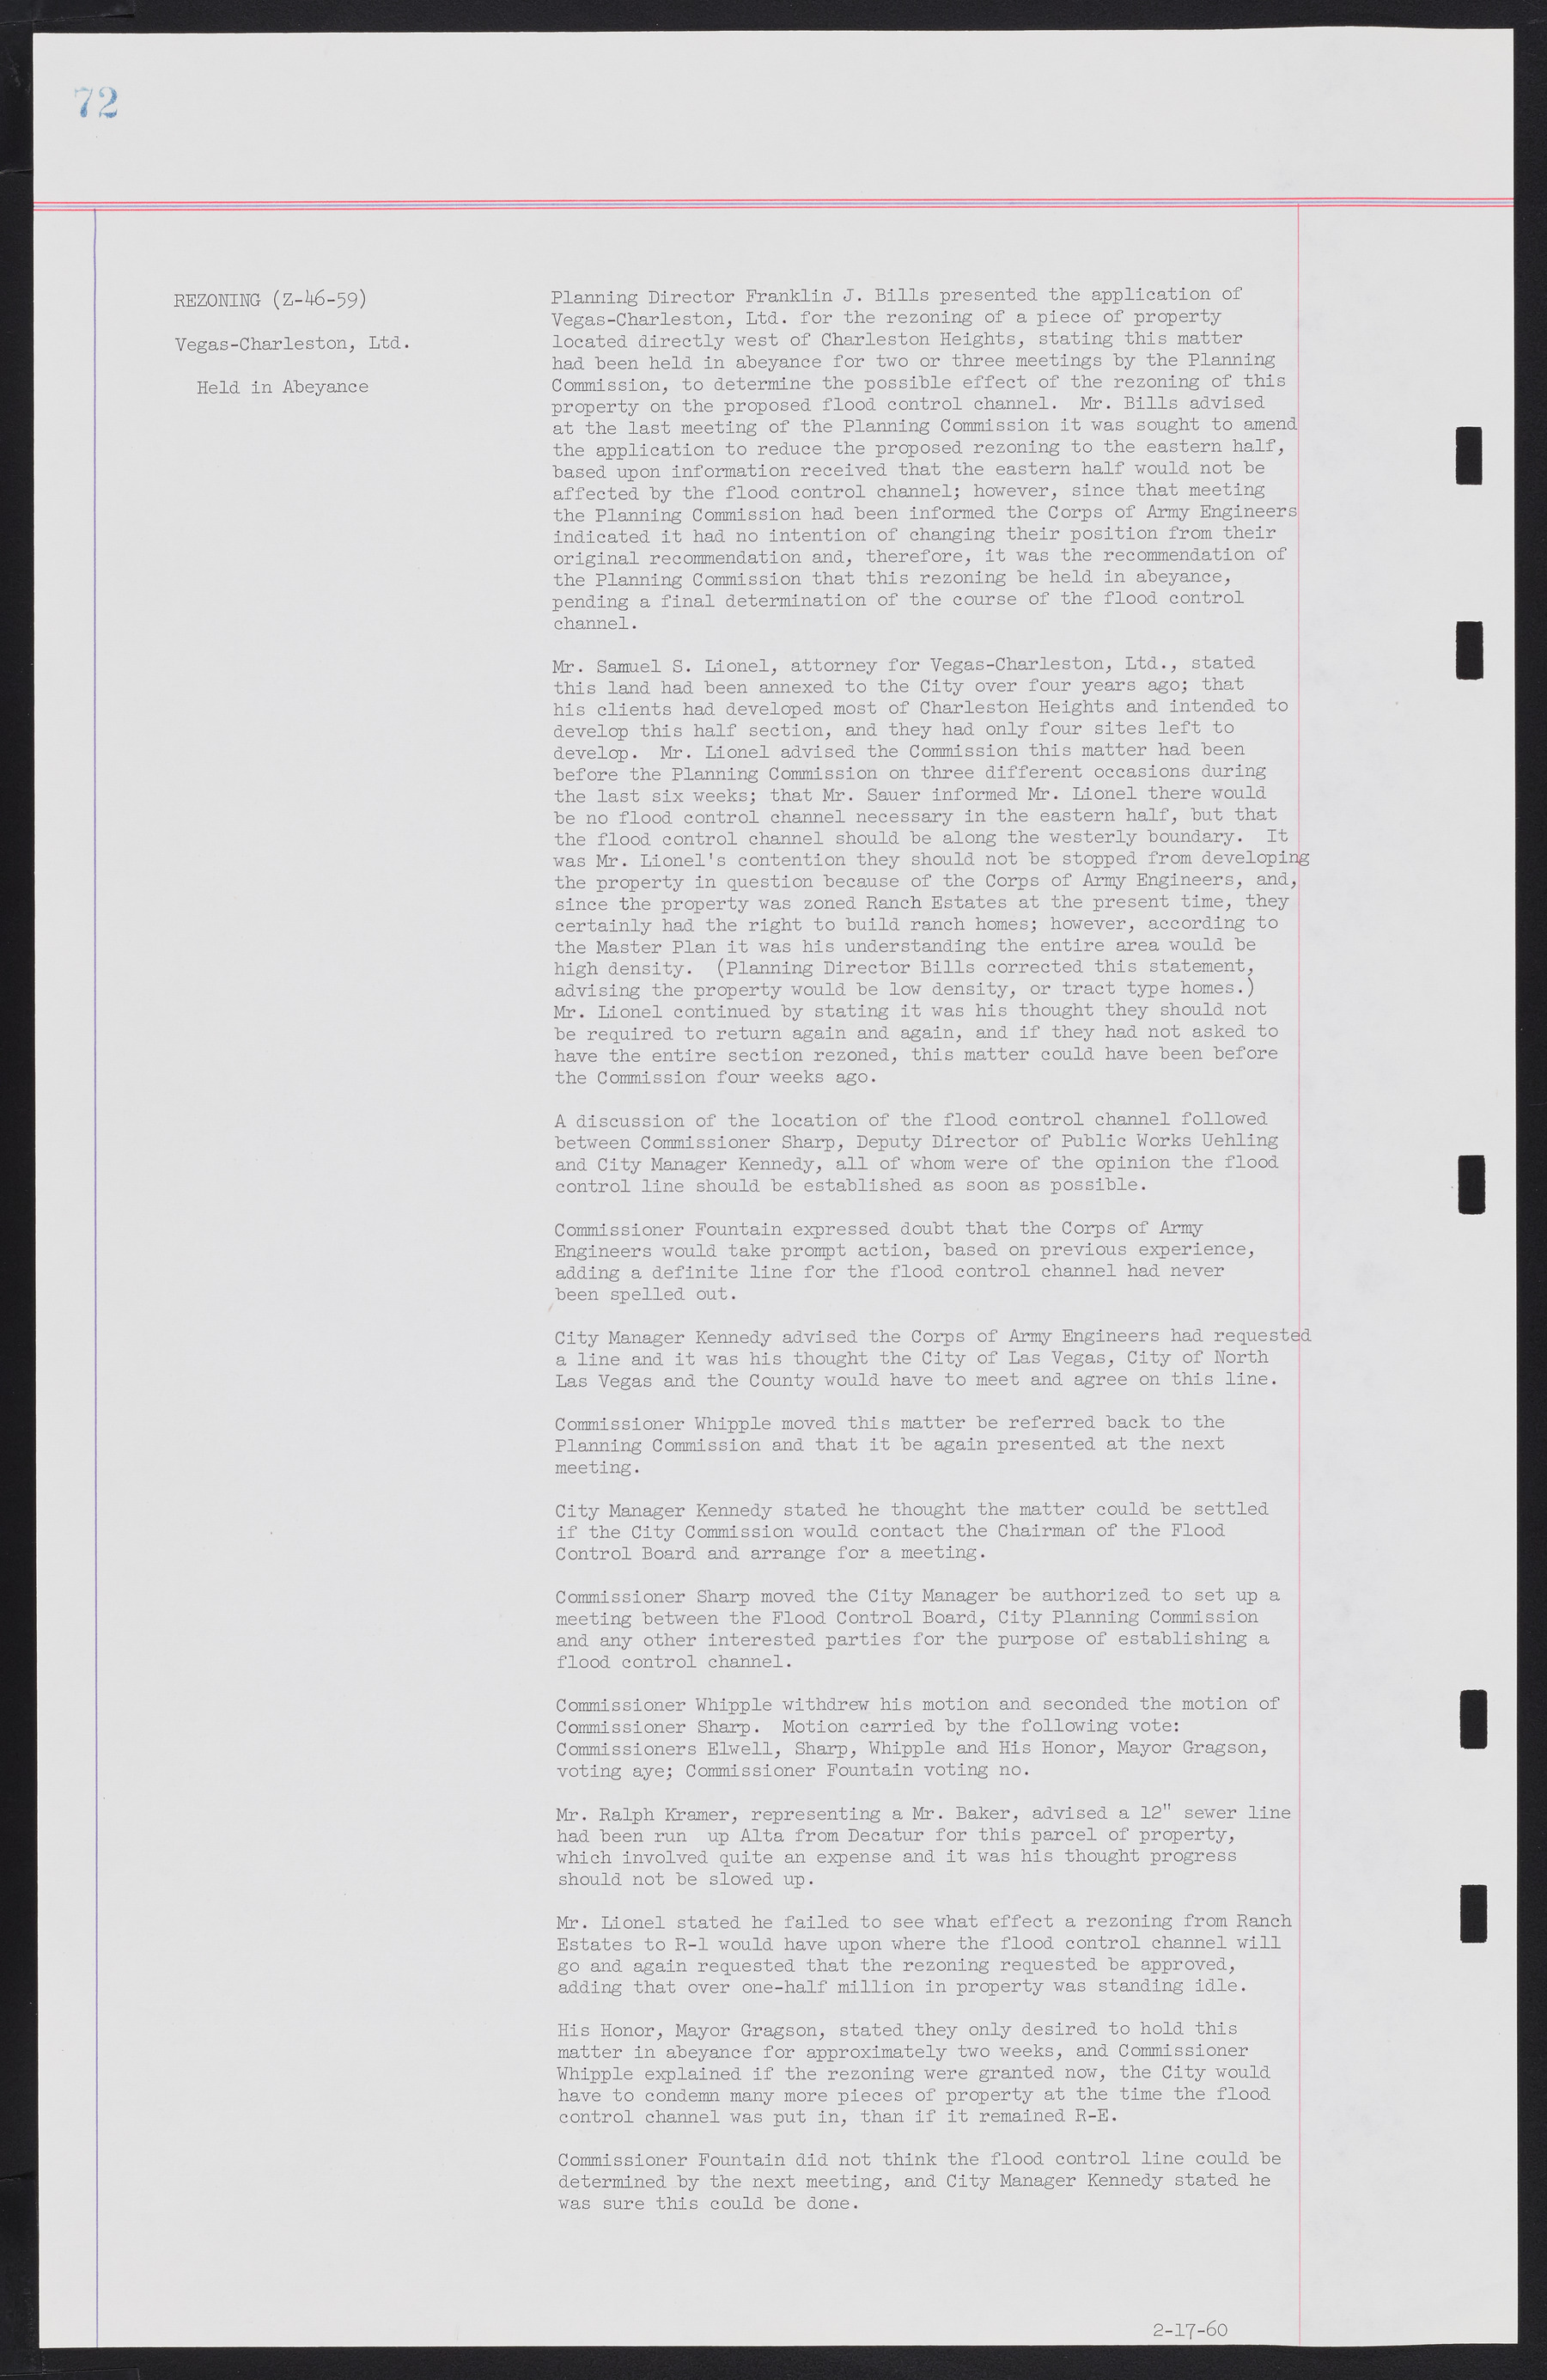 Las Vegas City Commission Minutes, December 8, 1959 to February 17, 1960, lvc000012-76